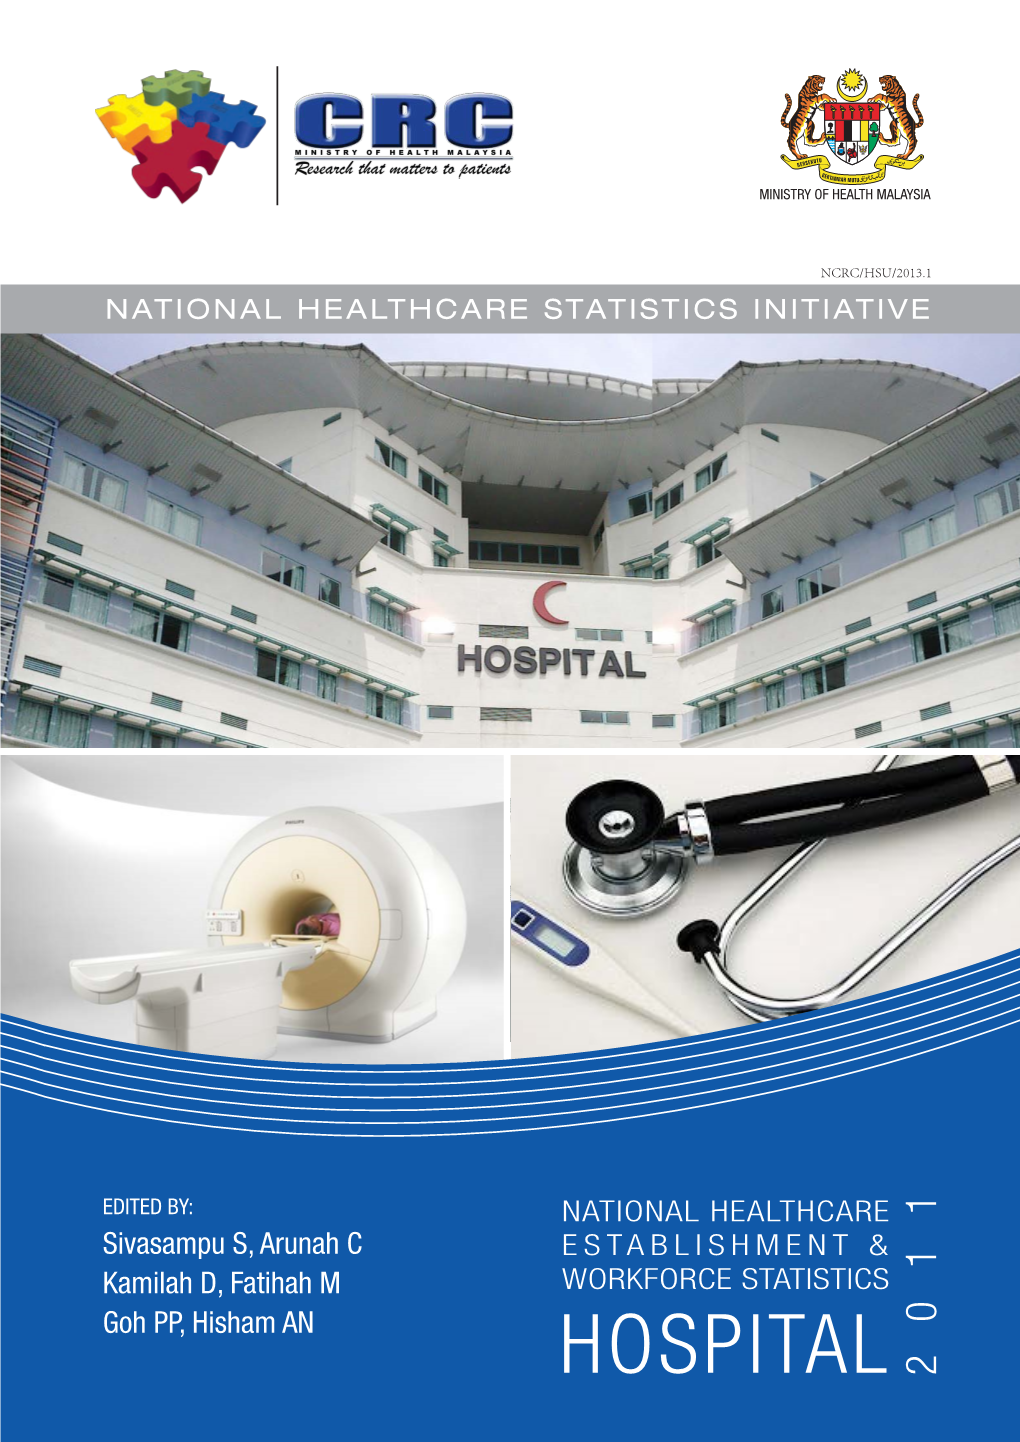 Hospital 2011 National Healthcare Establishment & Workforce Statistics 2011 Hospital